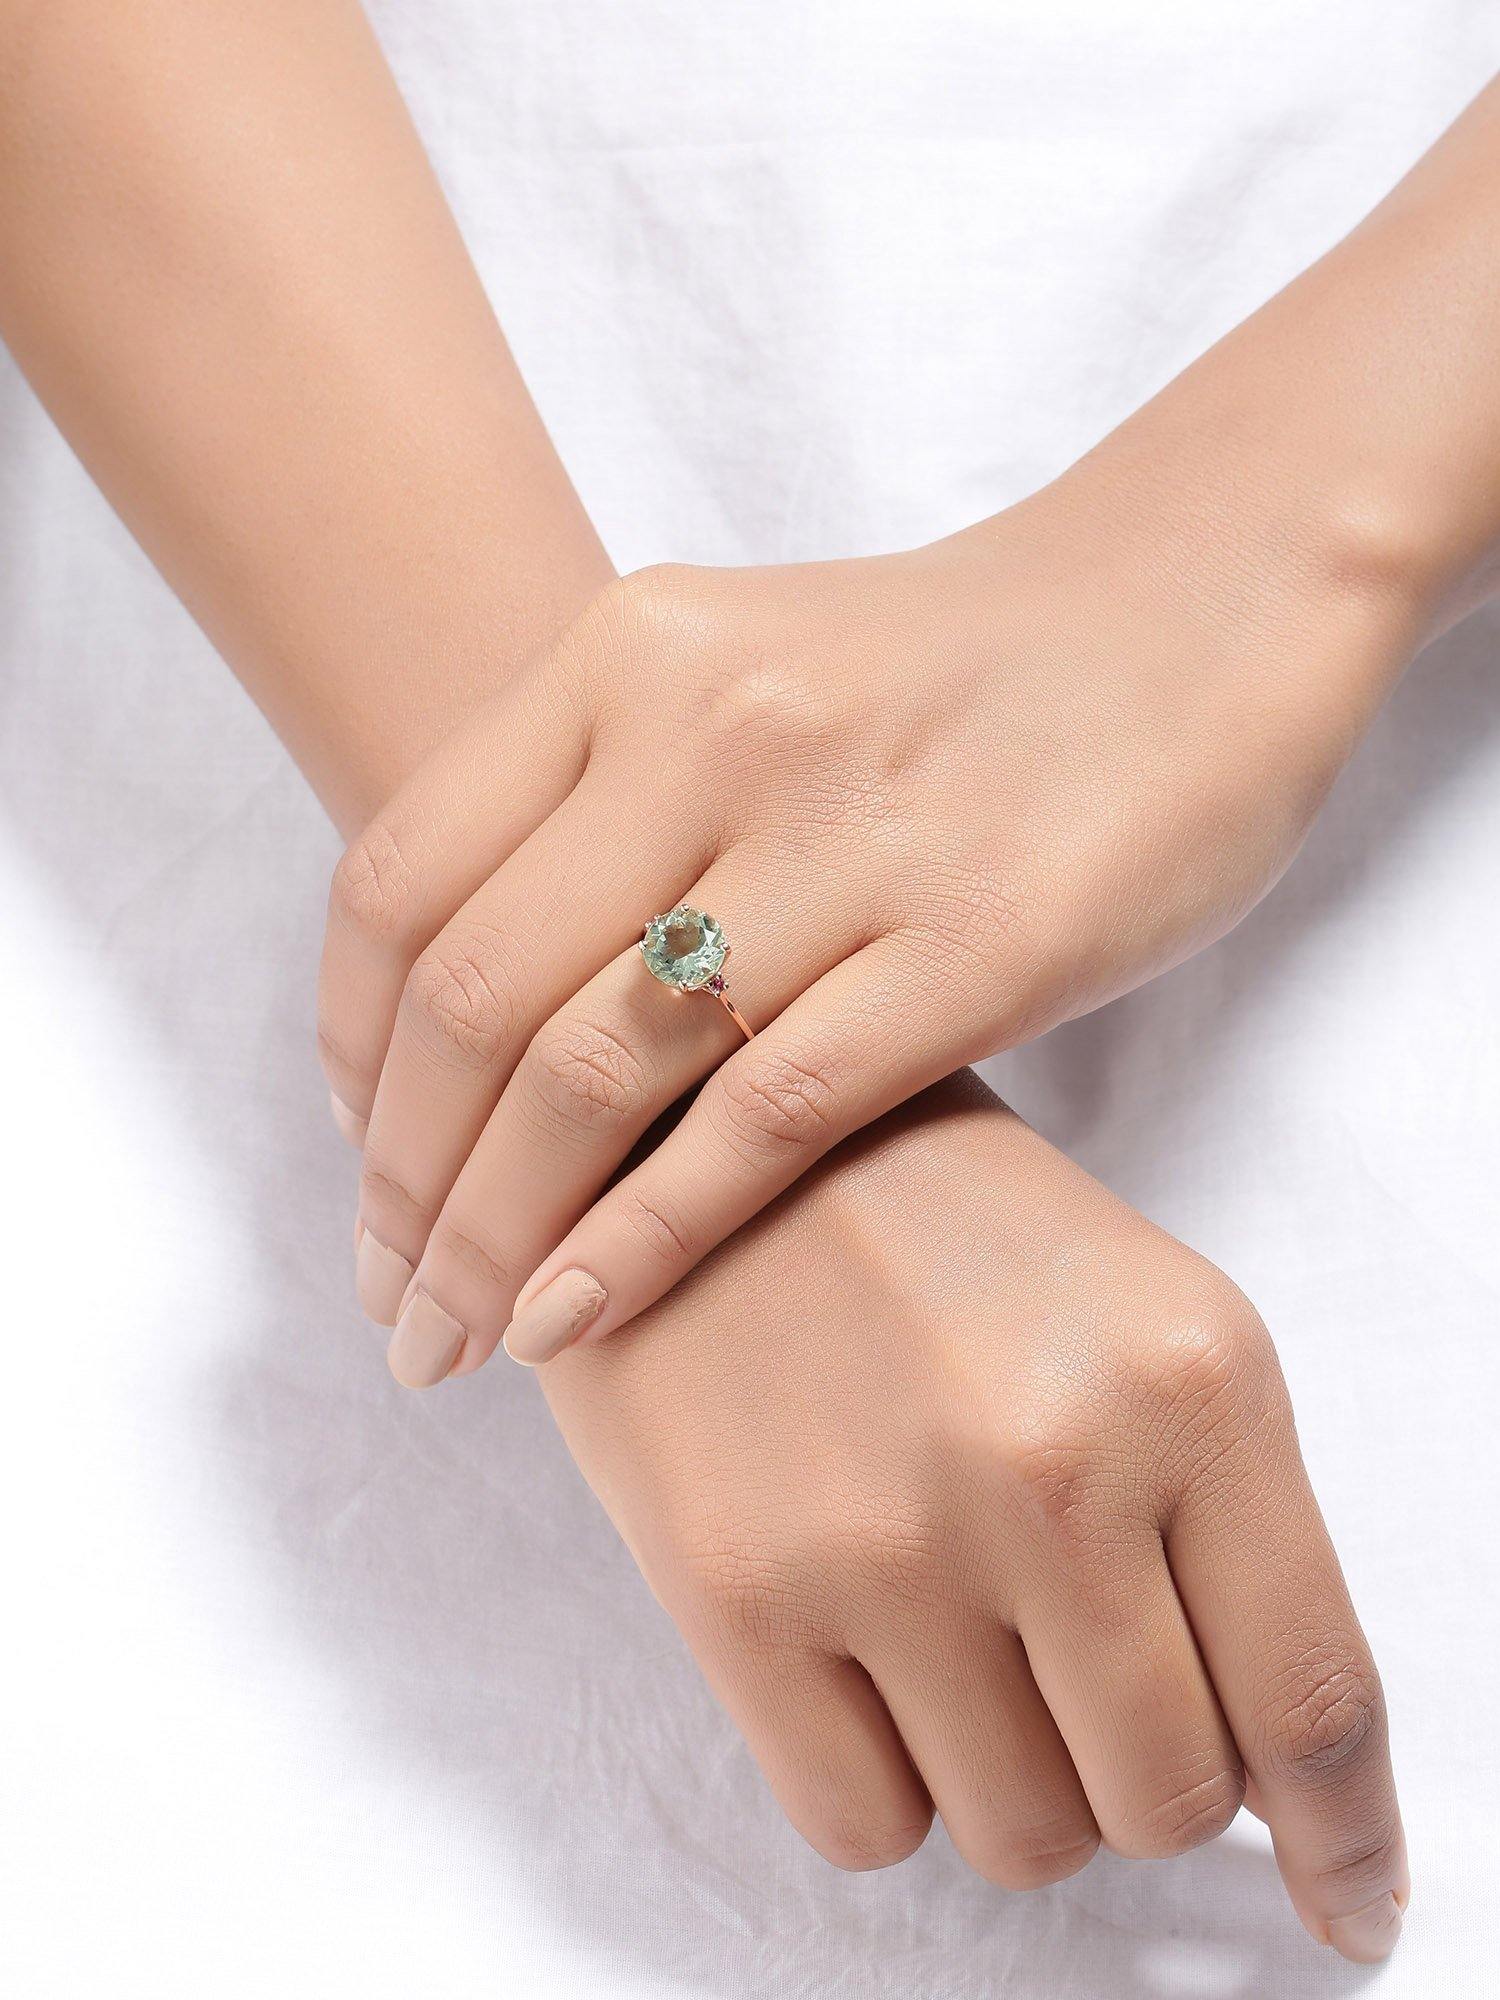 Green Amethyst Solid 10k Rose Gold Ring Jewelry - YoTreasure